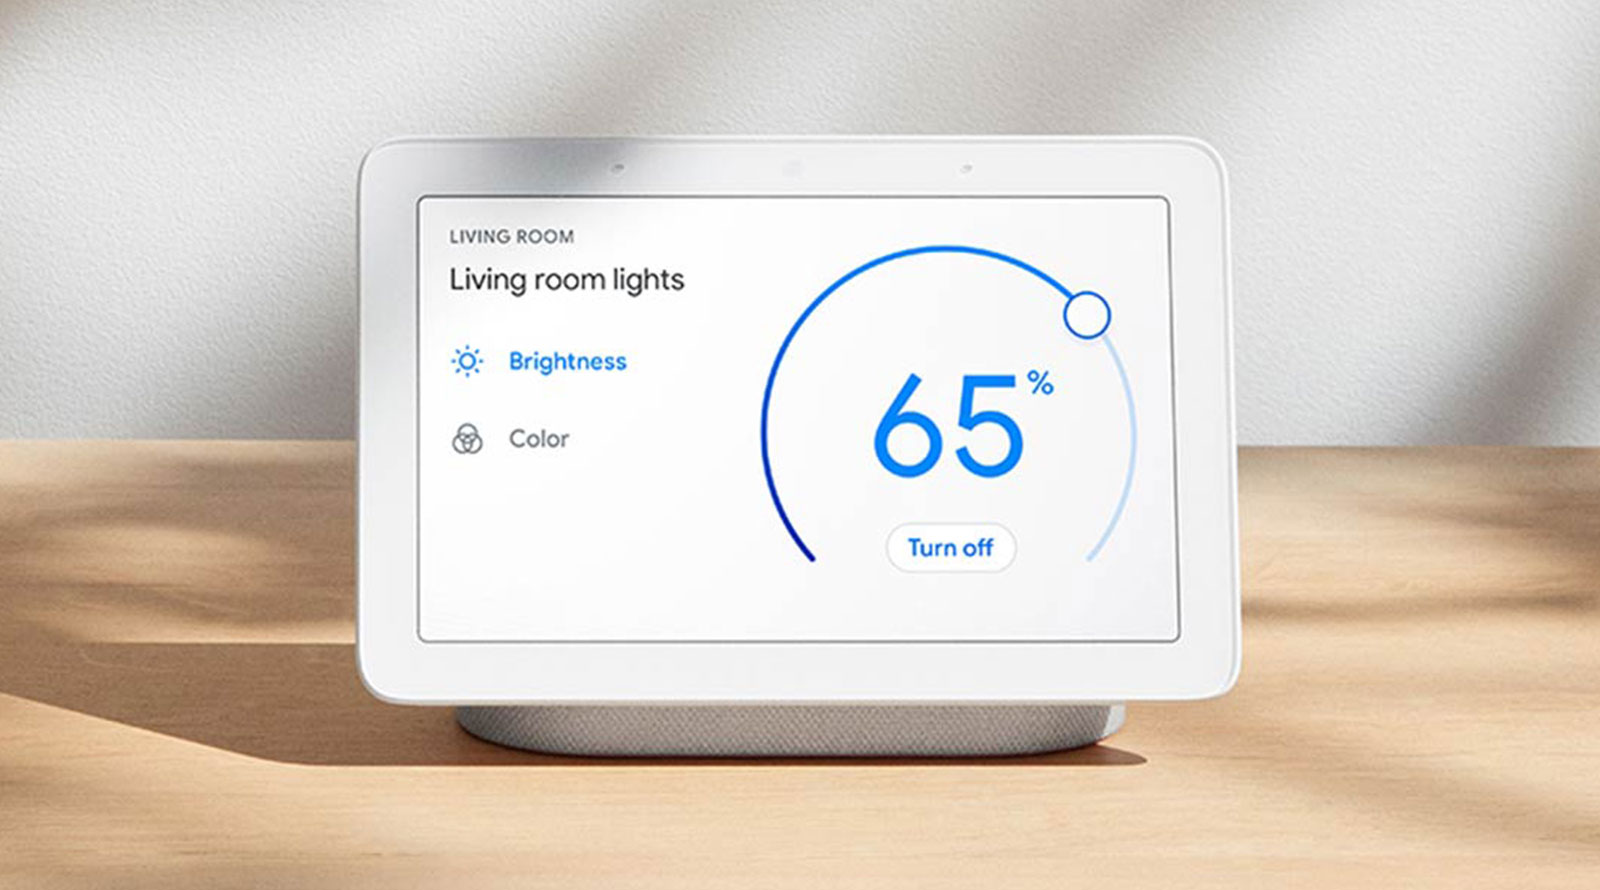 Smart Homes start with Google Nest